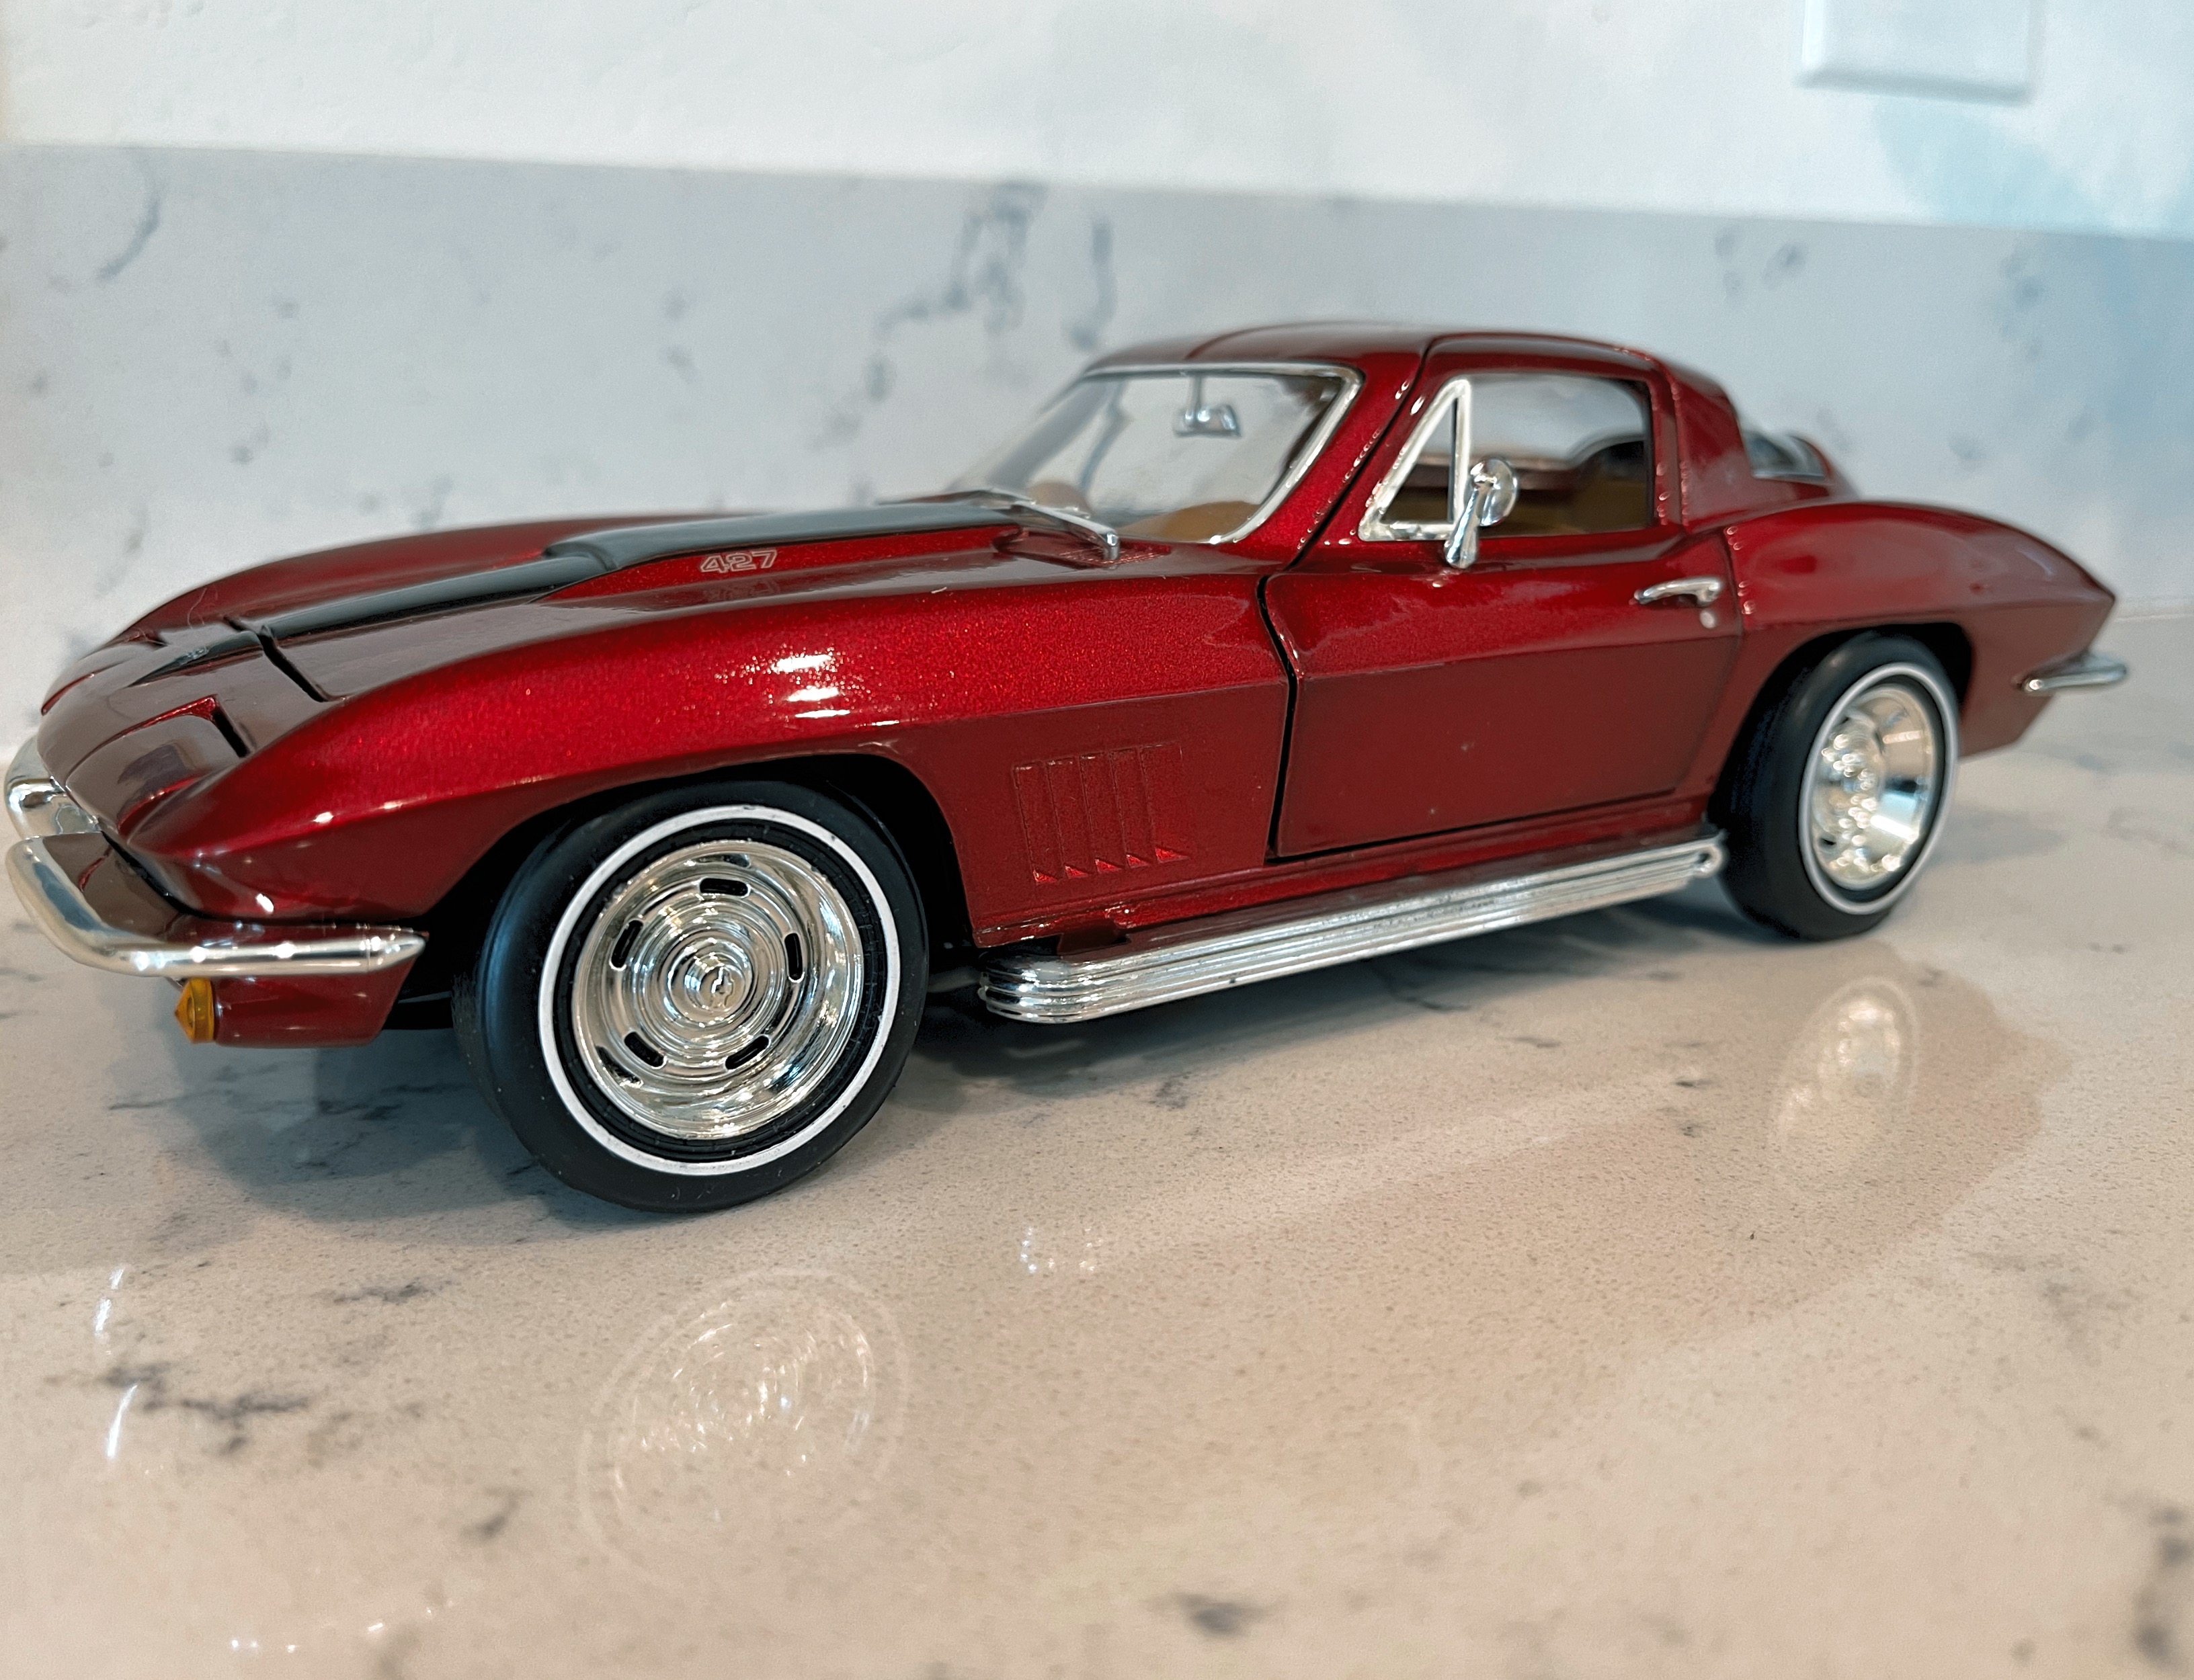 1/18 Scale Diecast Metal model - 1967 Corvette Coupe, 427CI, 435HP